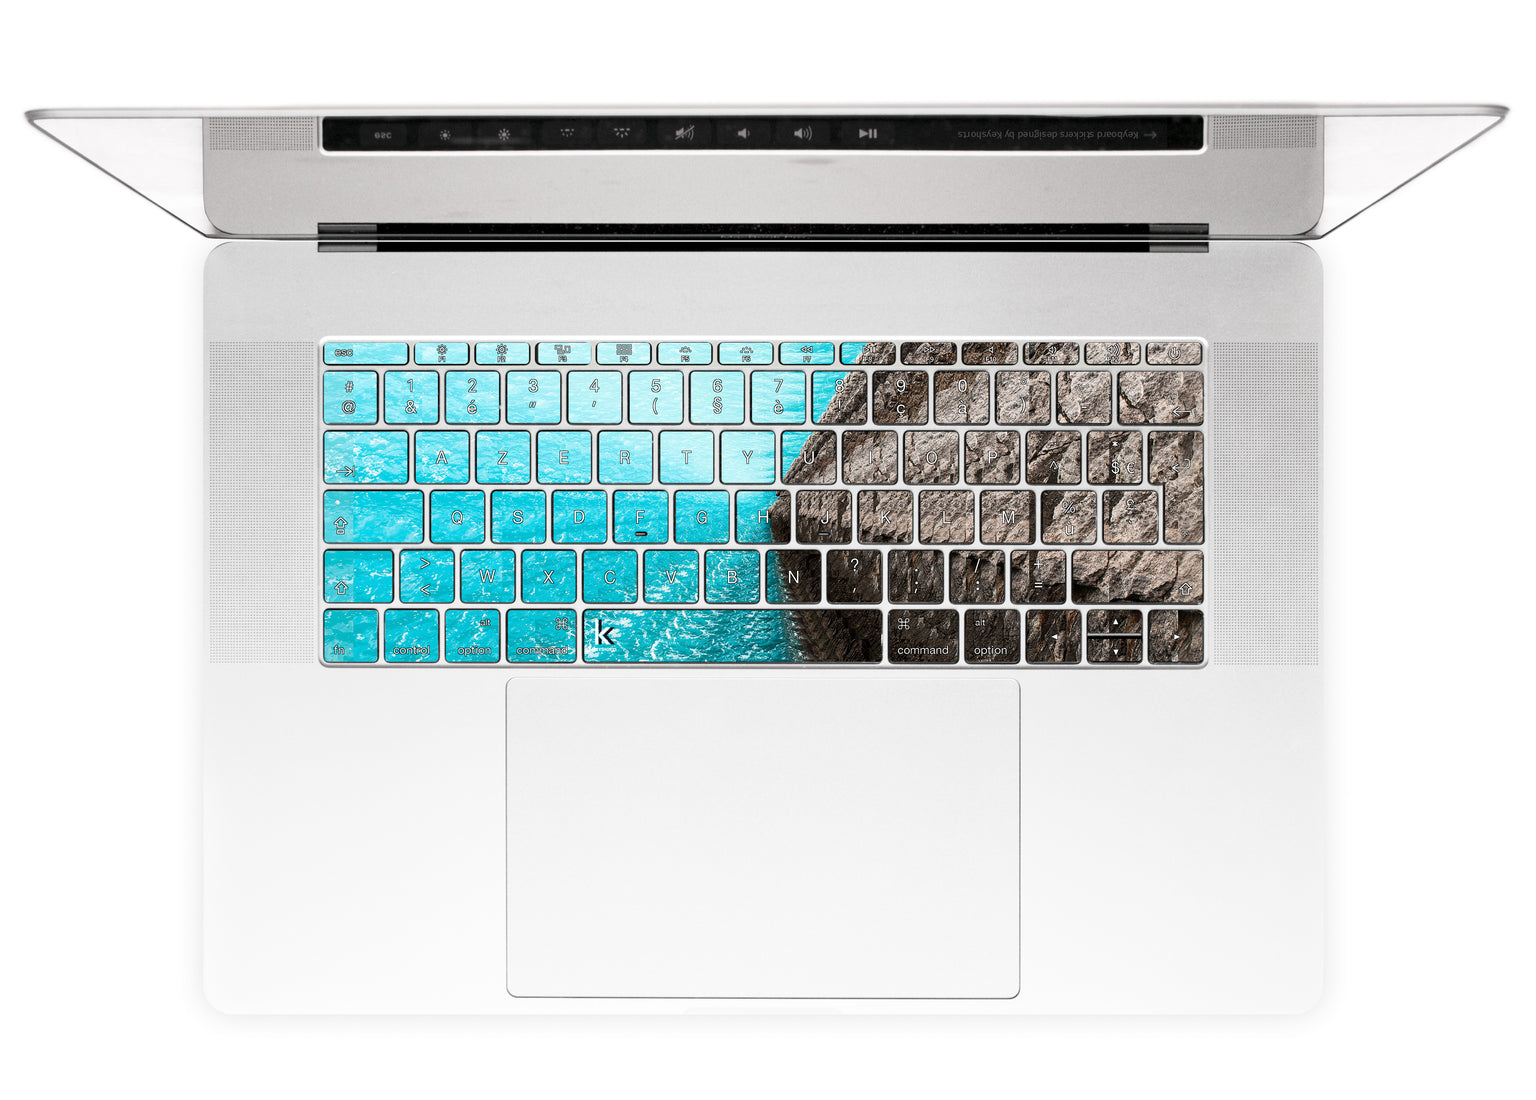 Psycho Wave MacBook Keyboard Stickers alternate FR